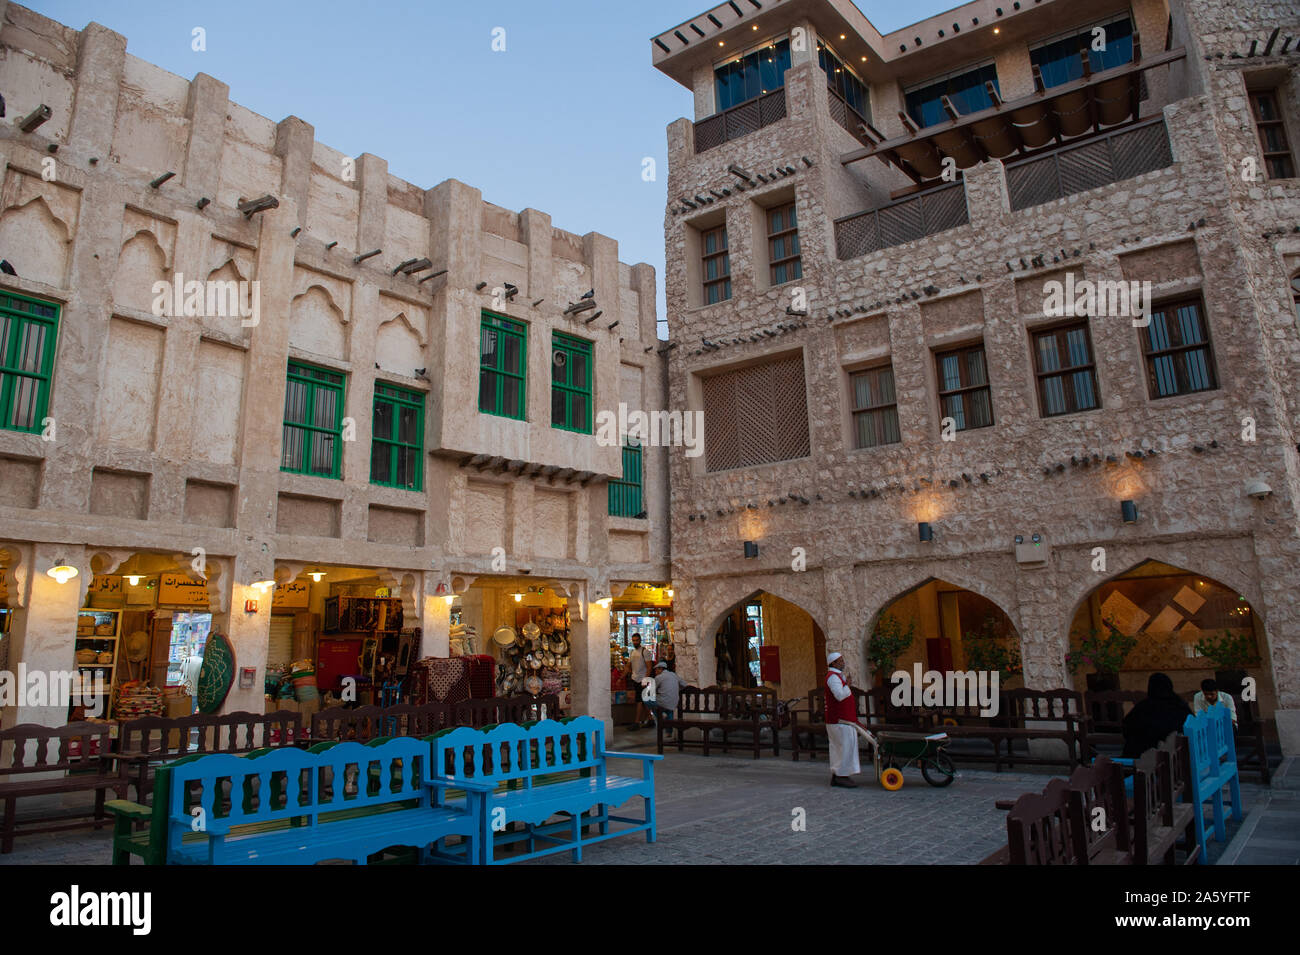 Traditional Arabic architecture in Souk Waqif, Doha, Qatar Stock Photo